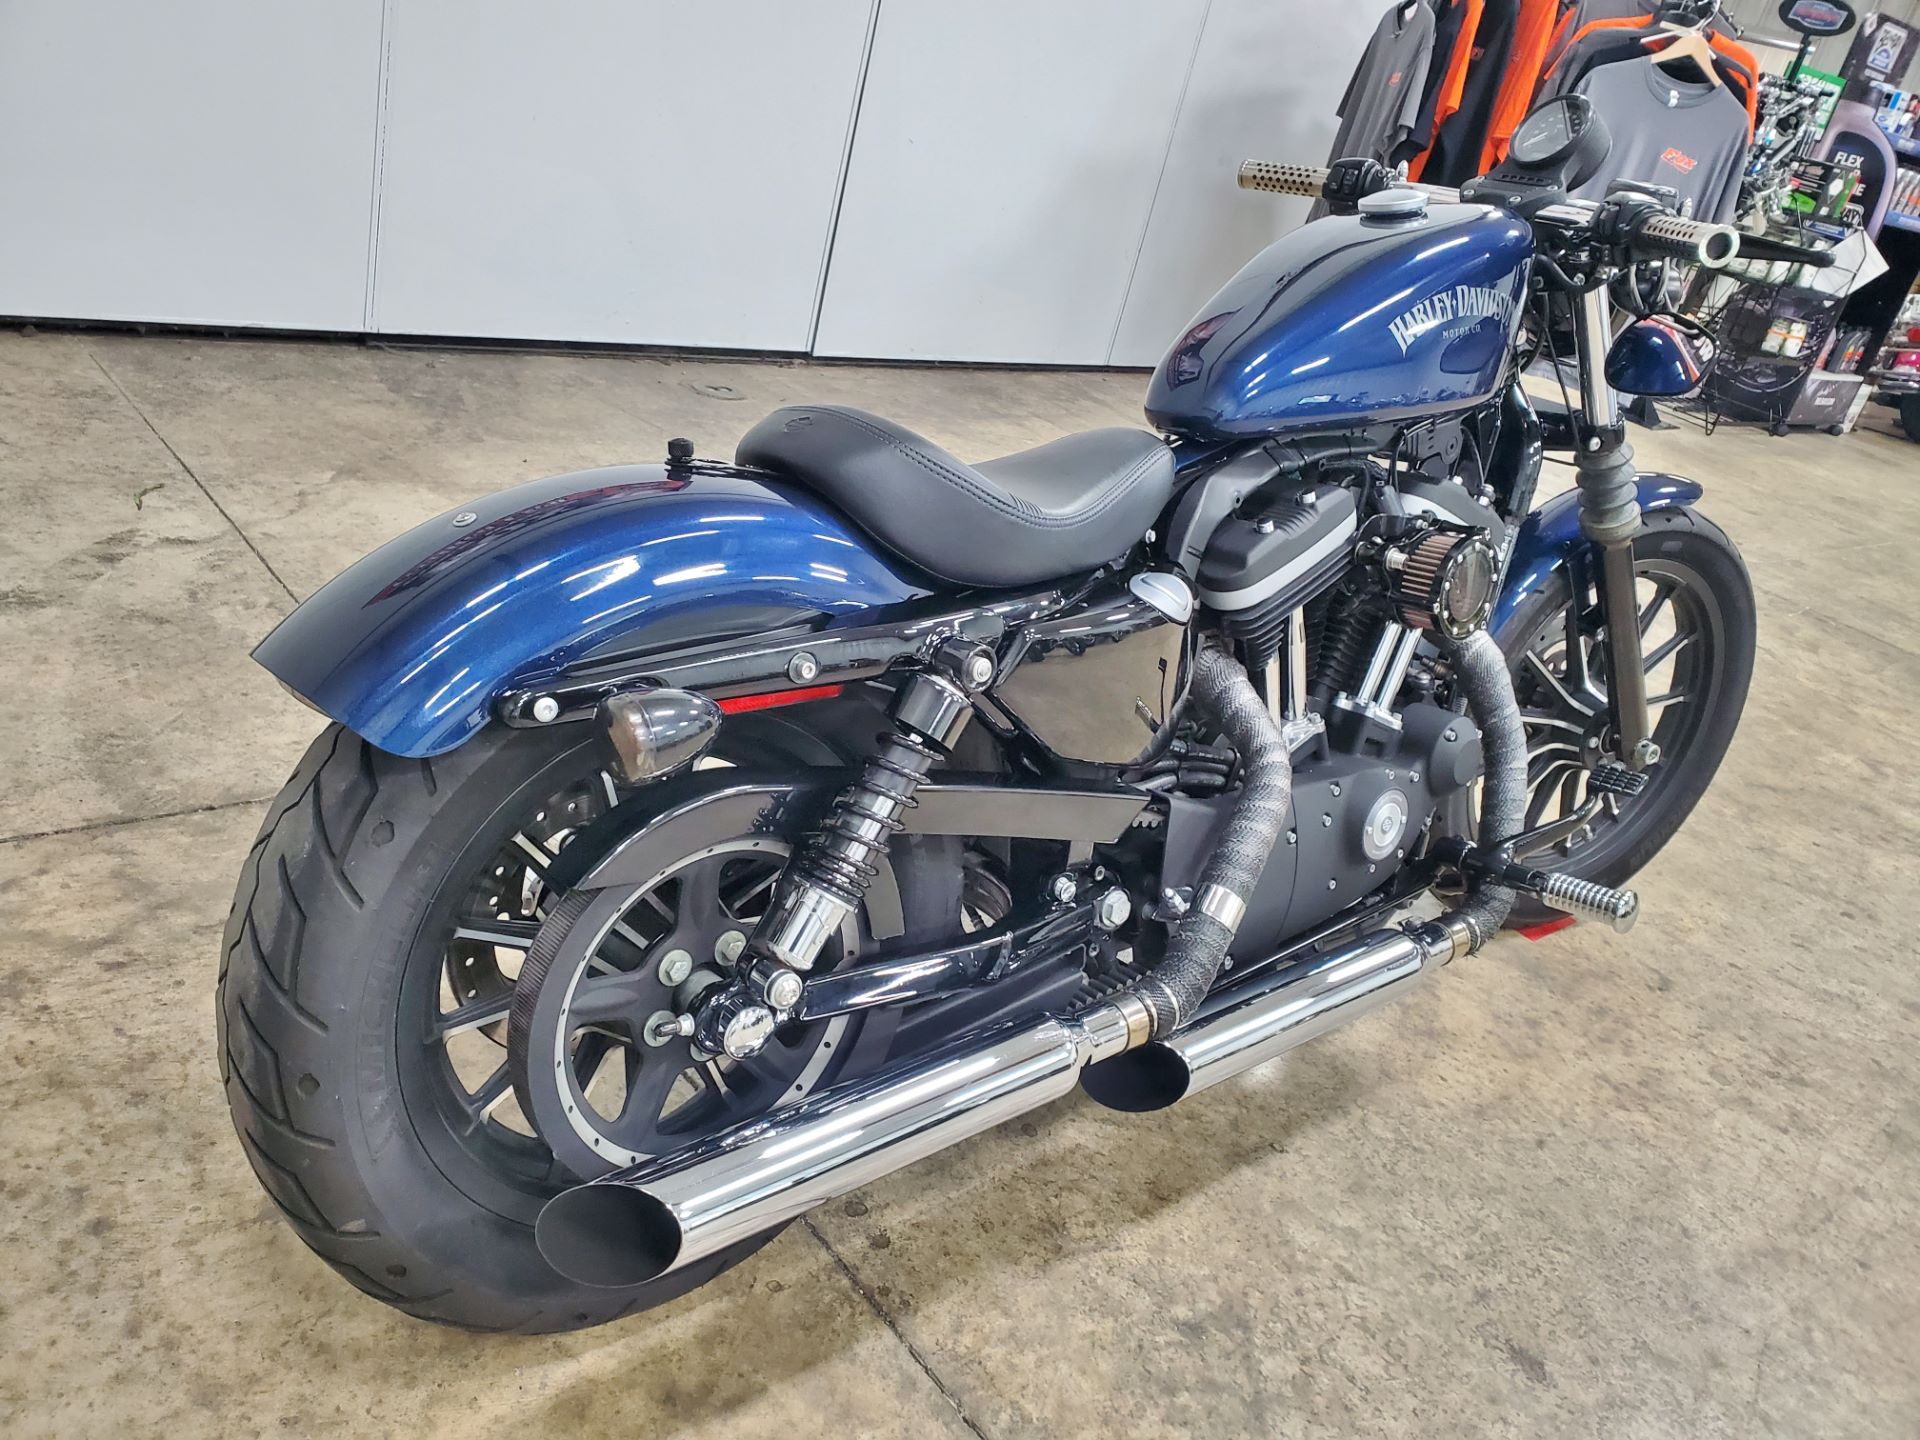 2012 Harley-Davidson Sportster® Iron 883™ in Sandusky, Ohio - Photo 9